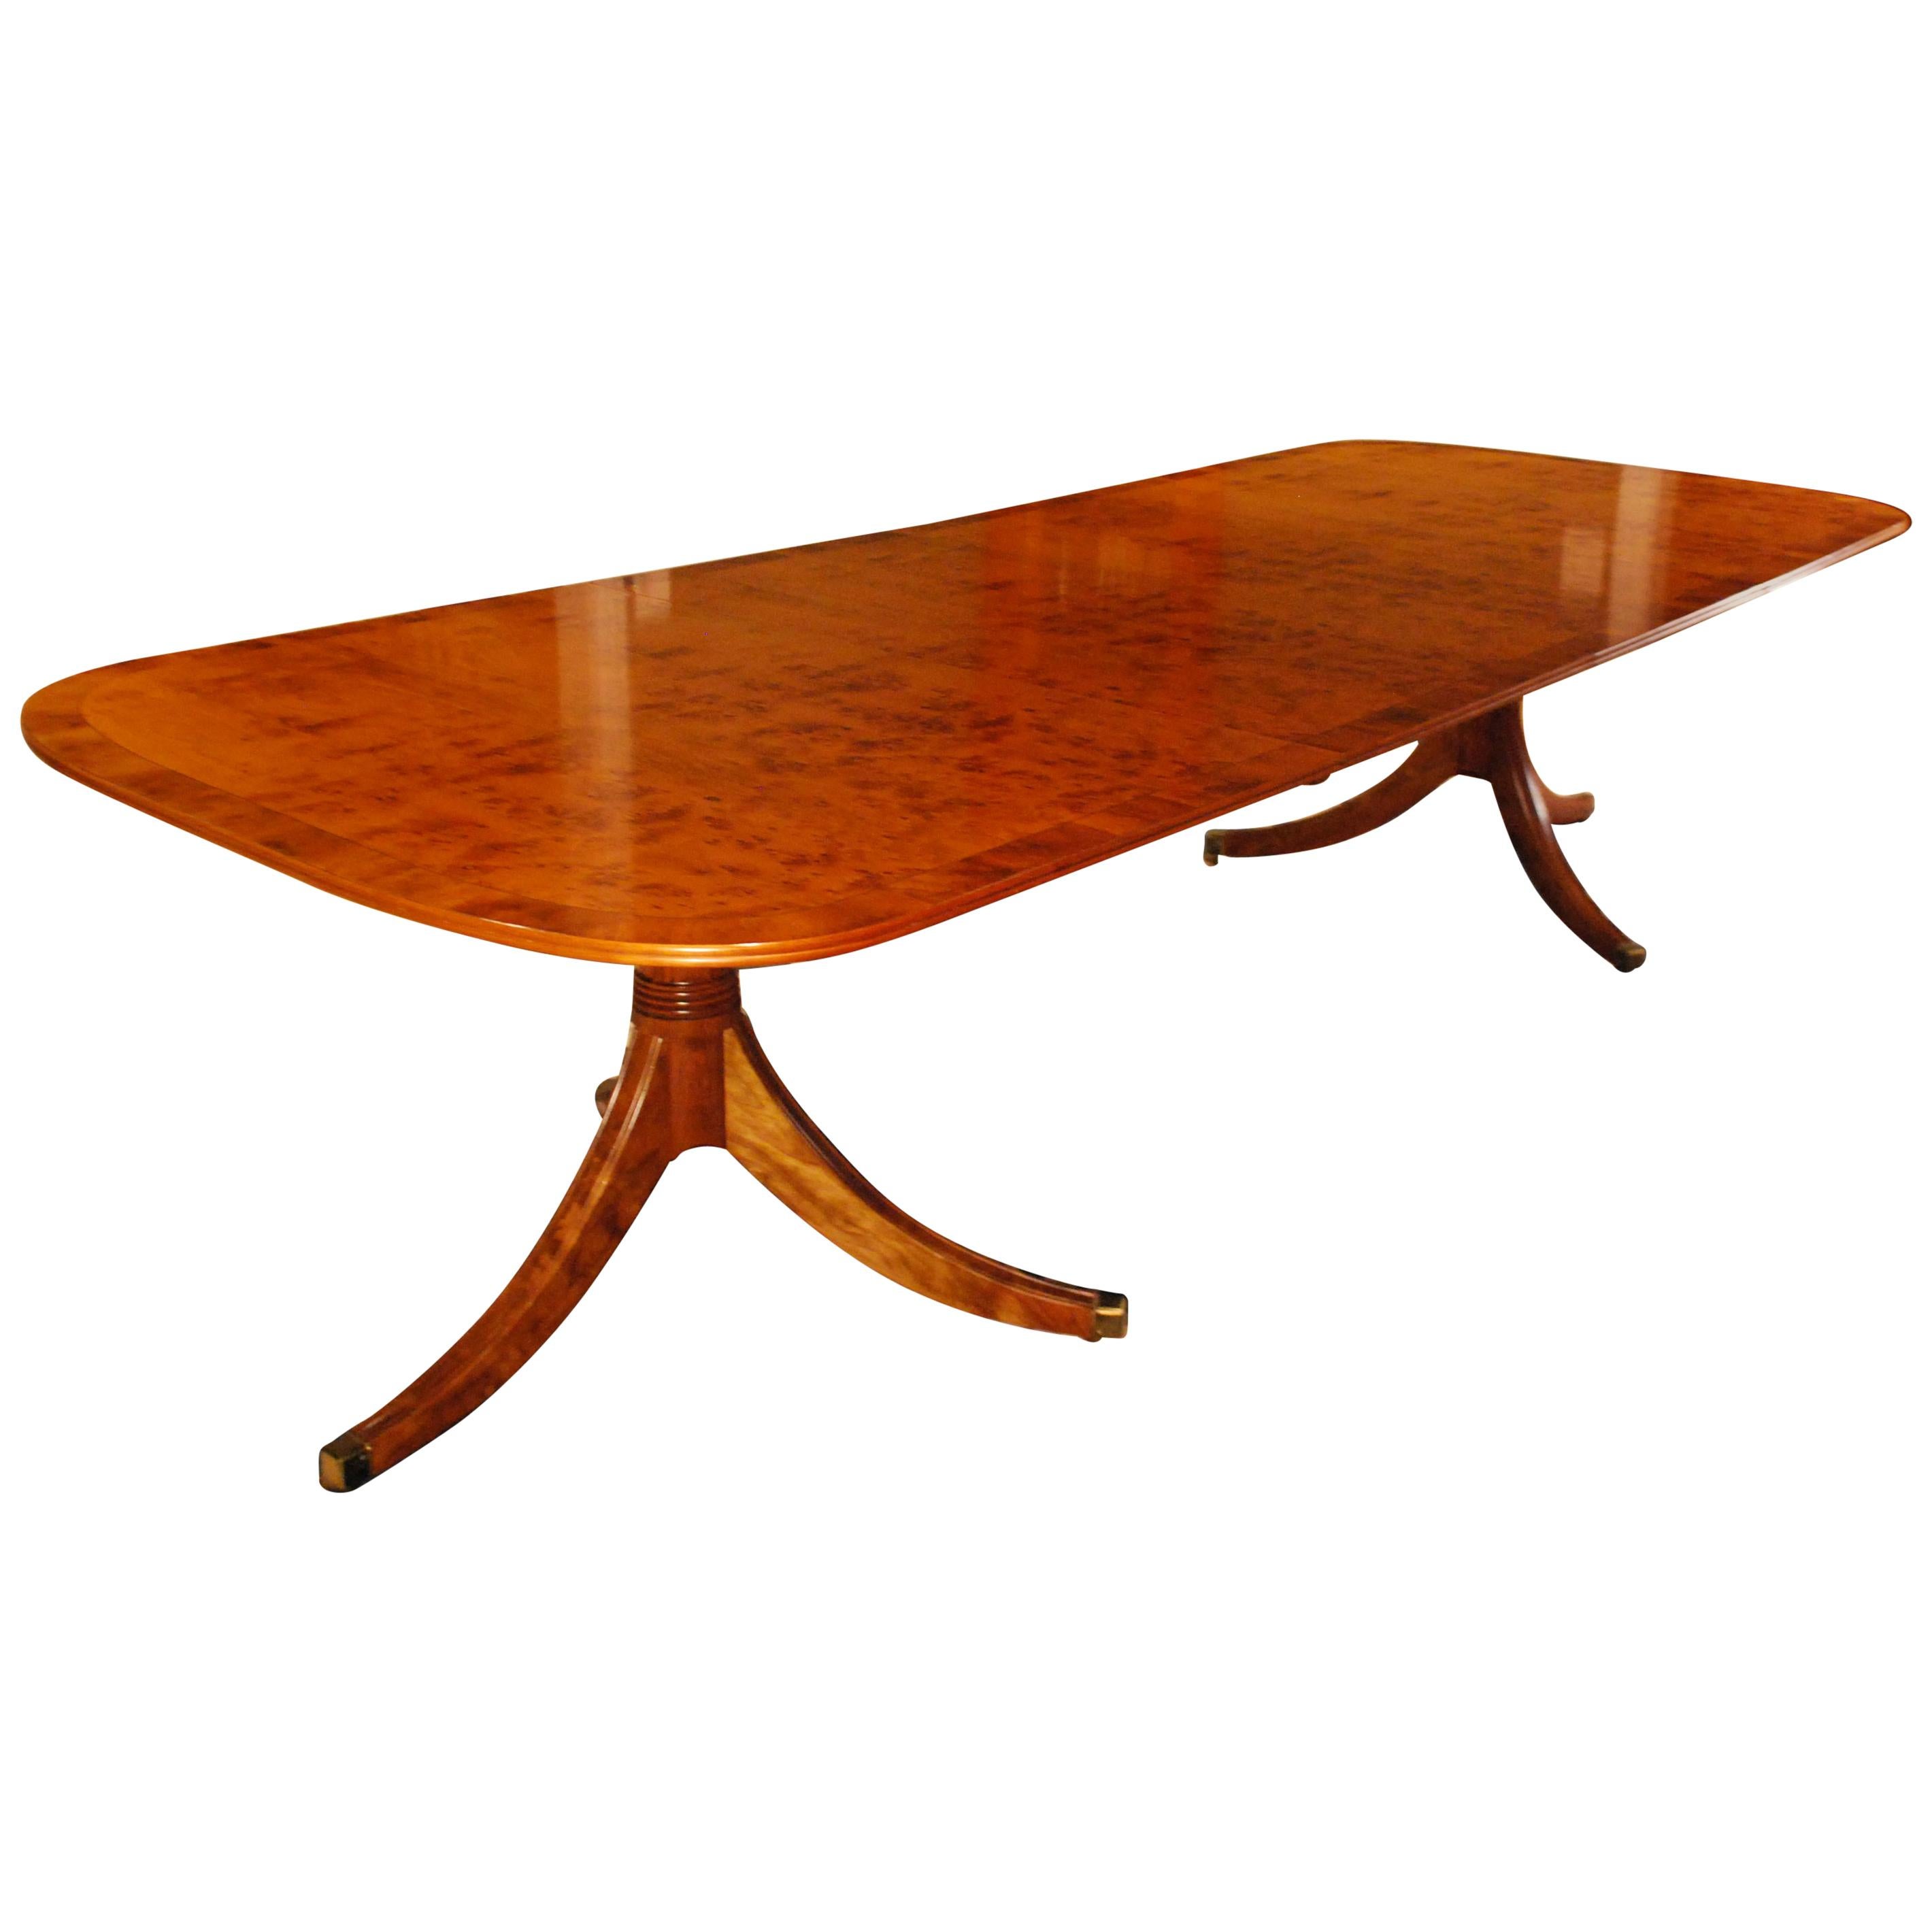 George III Style Pedestal Table in Yewood